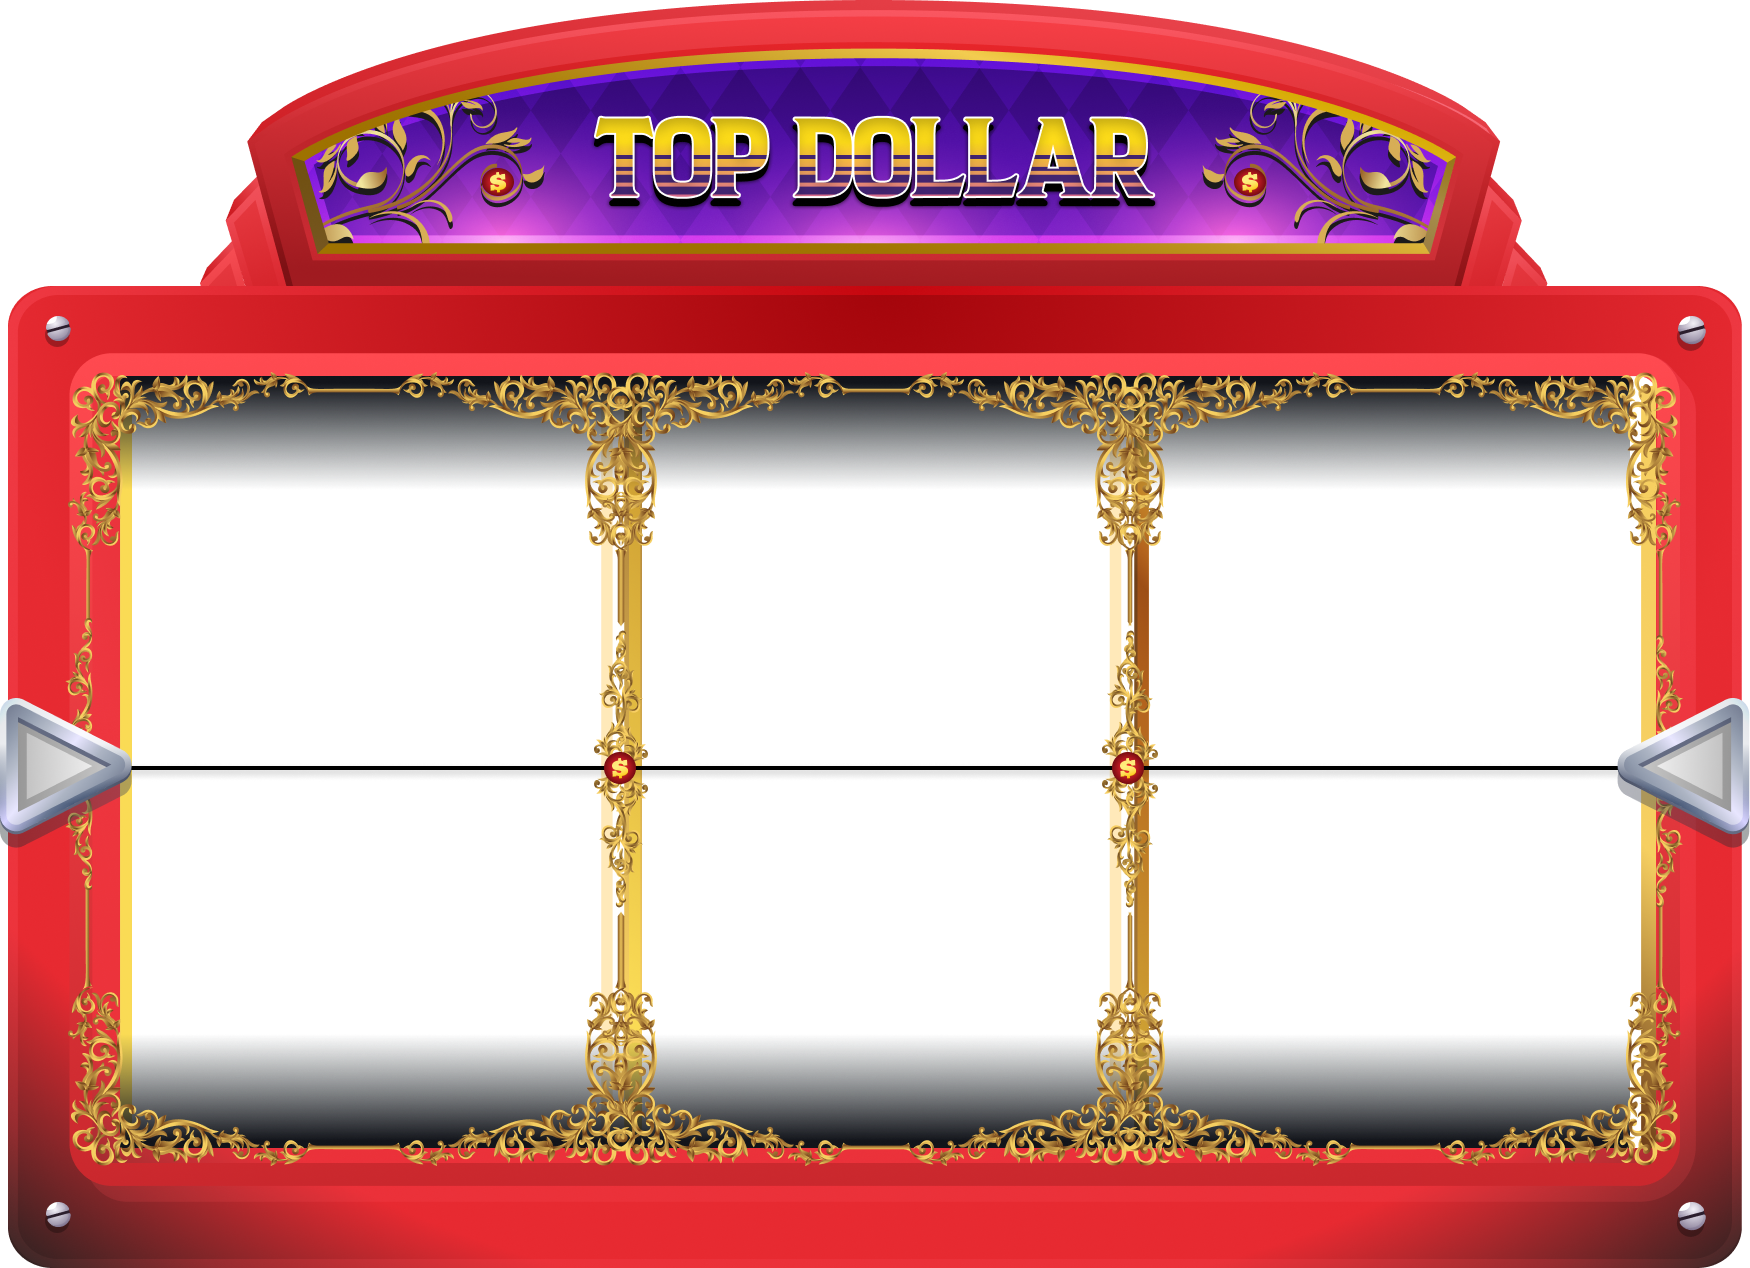 TopDollar Slot